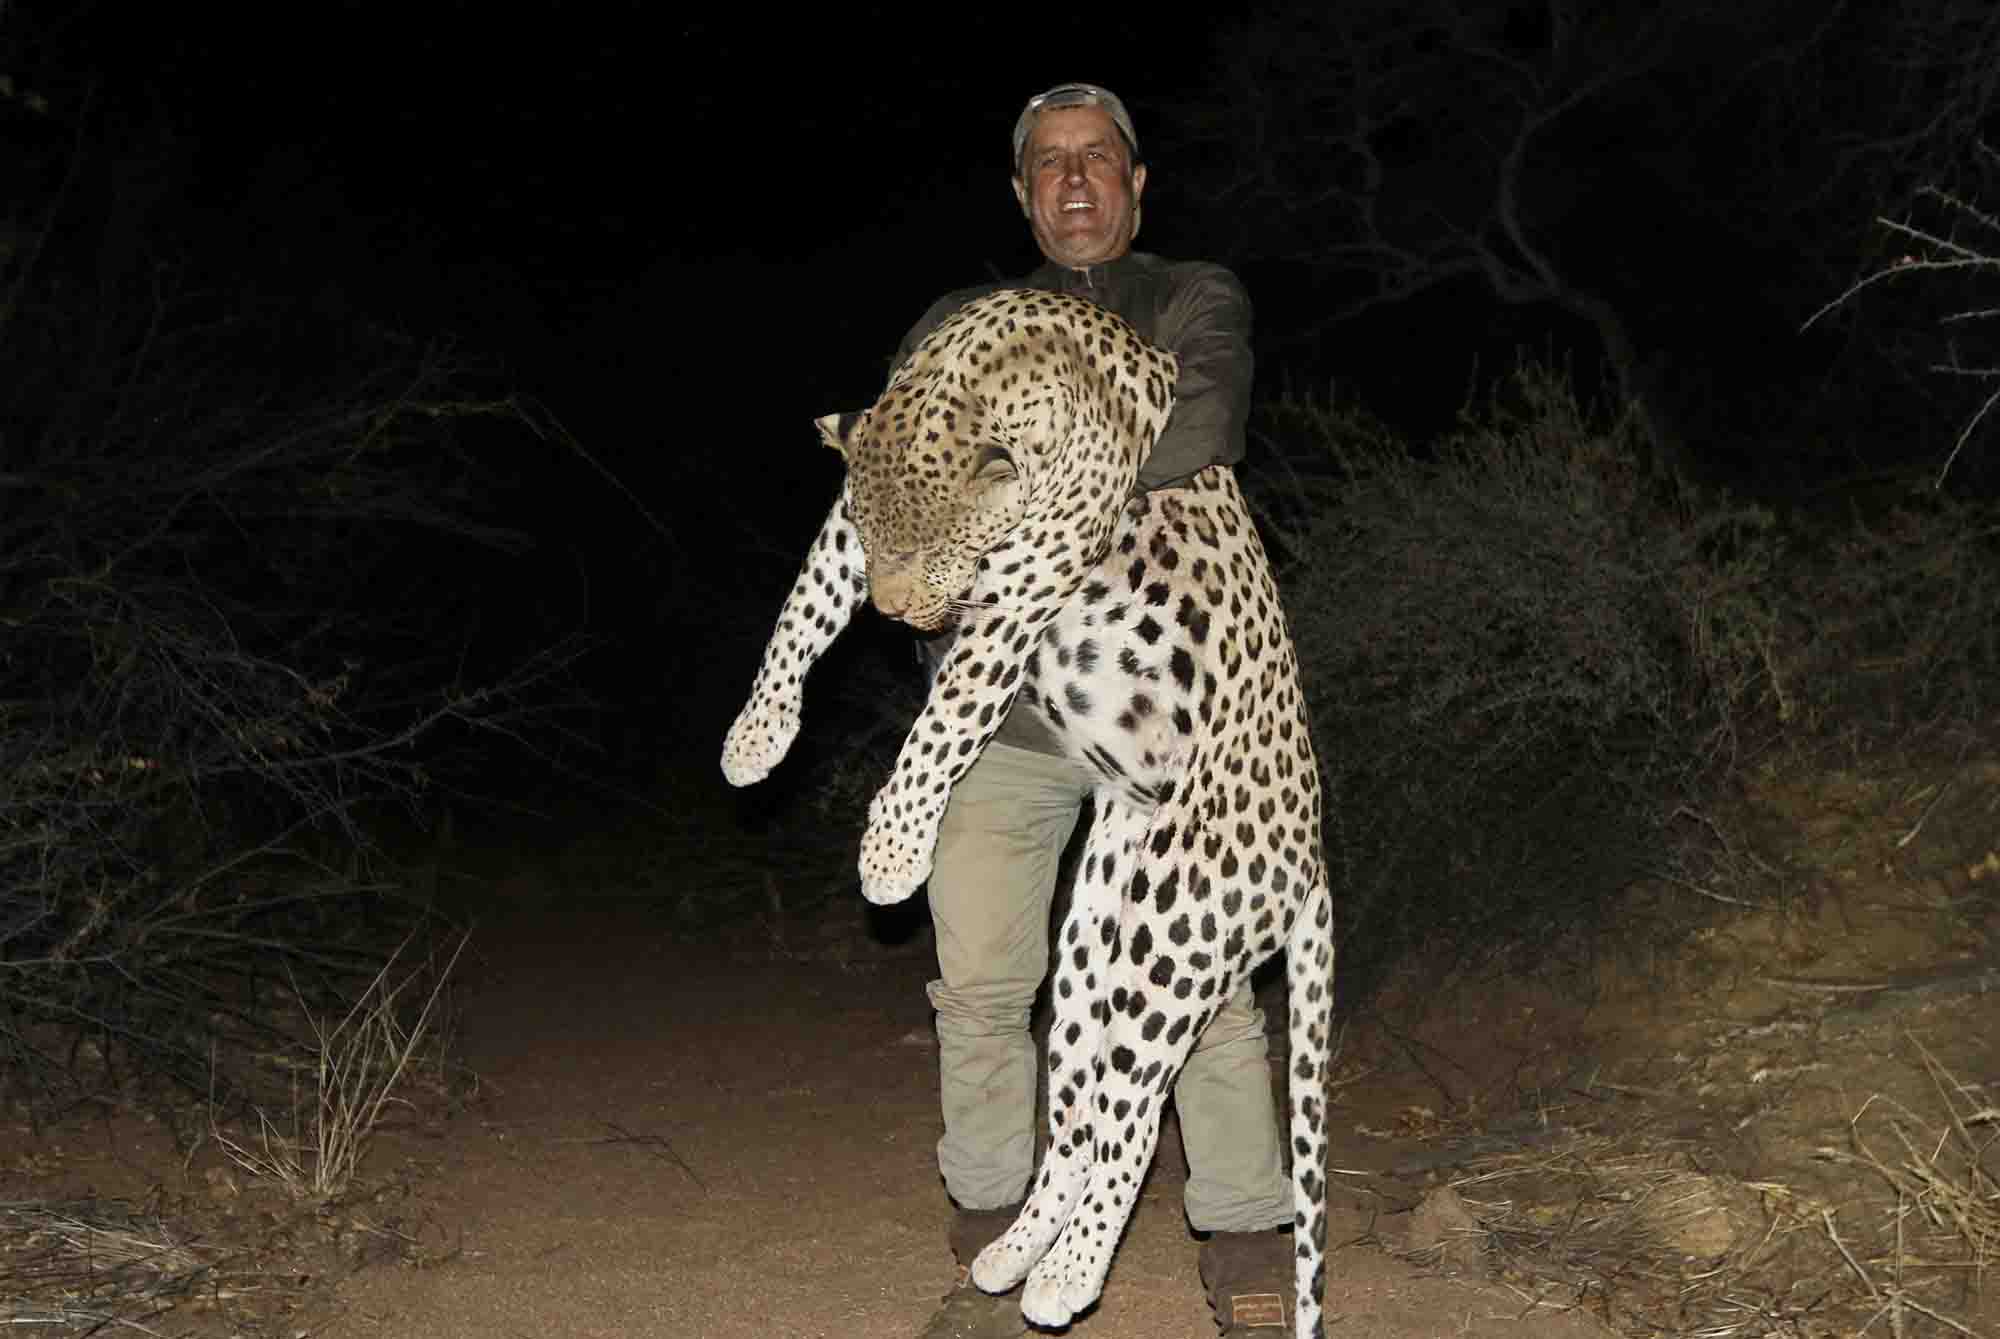 Leopardo medžioklė Namibijoje